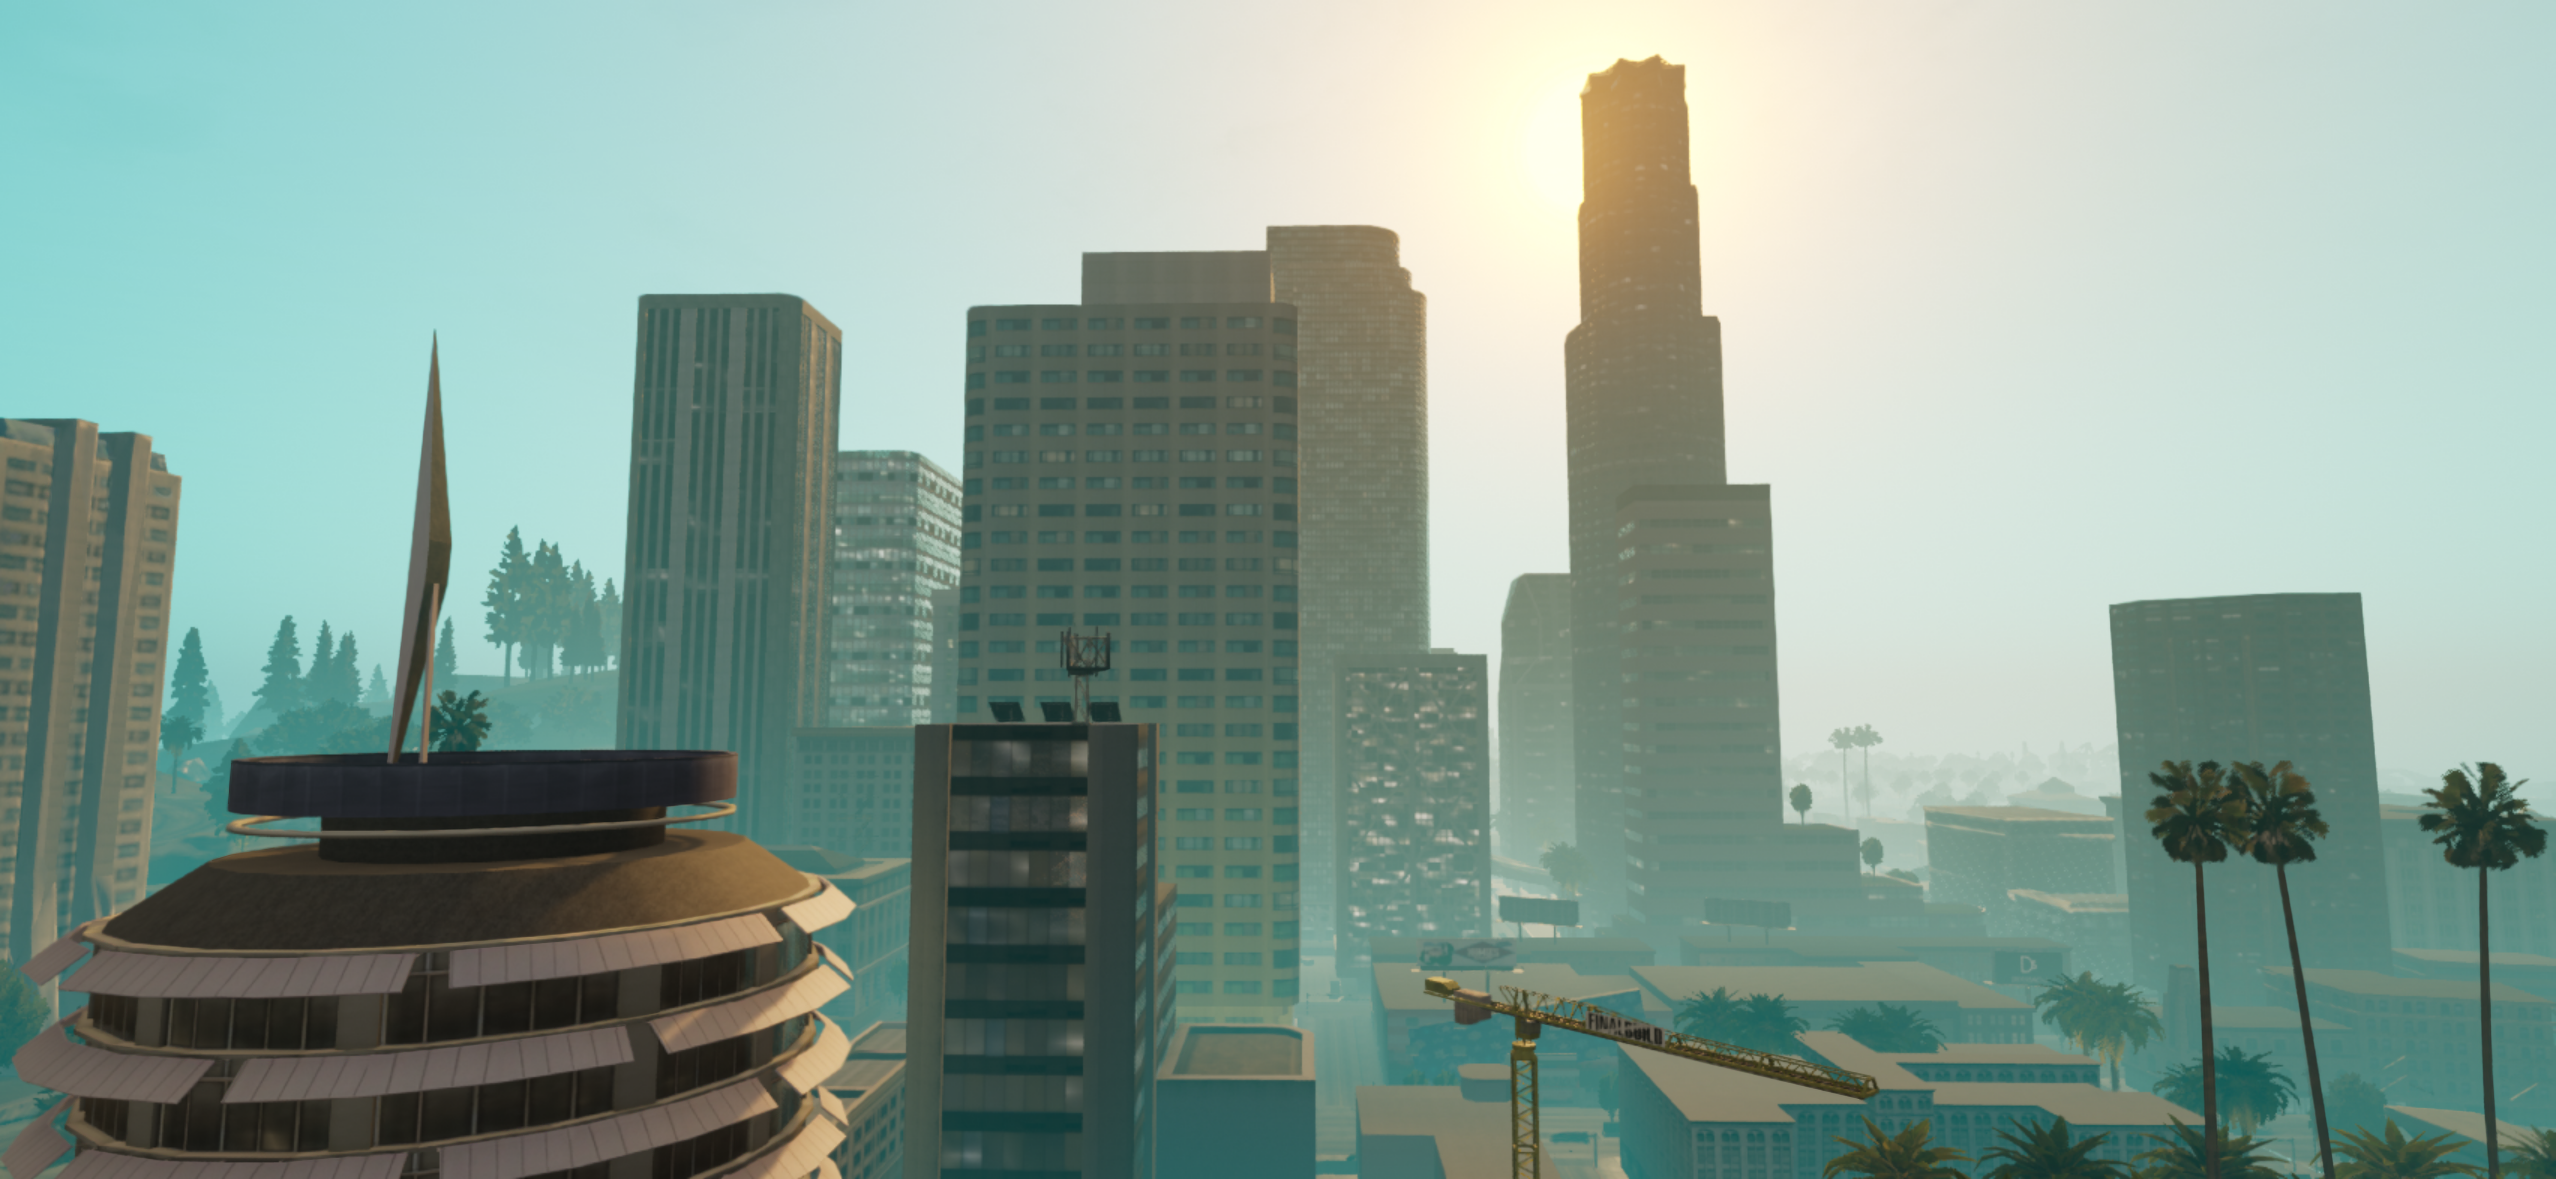 Screenshot 1 of GTA: सैन एंड्रियास - निश्चित 